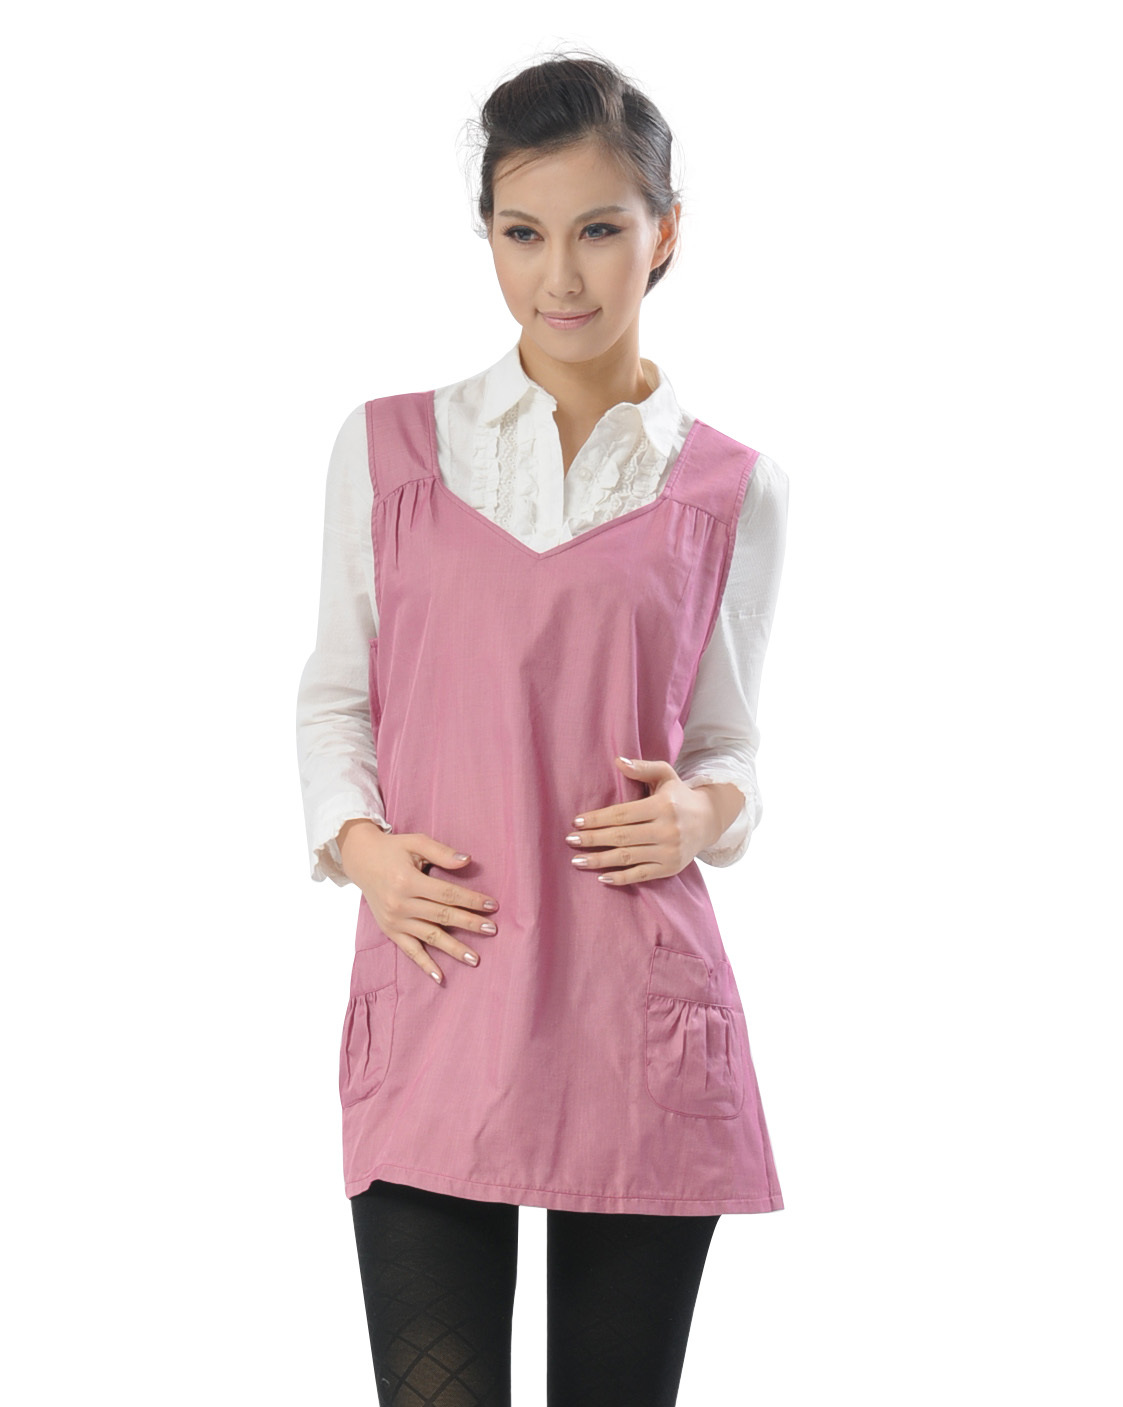 Radiation-resistant silver fiber radiation-resistant clothing radiation-resistant maternity clothing summer vest c31521